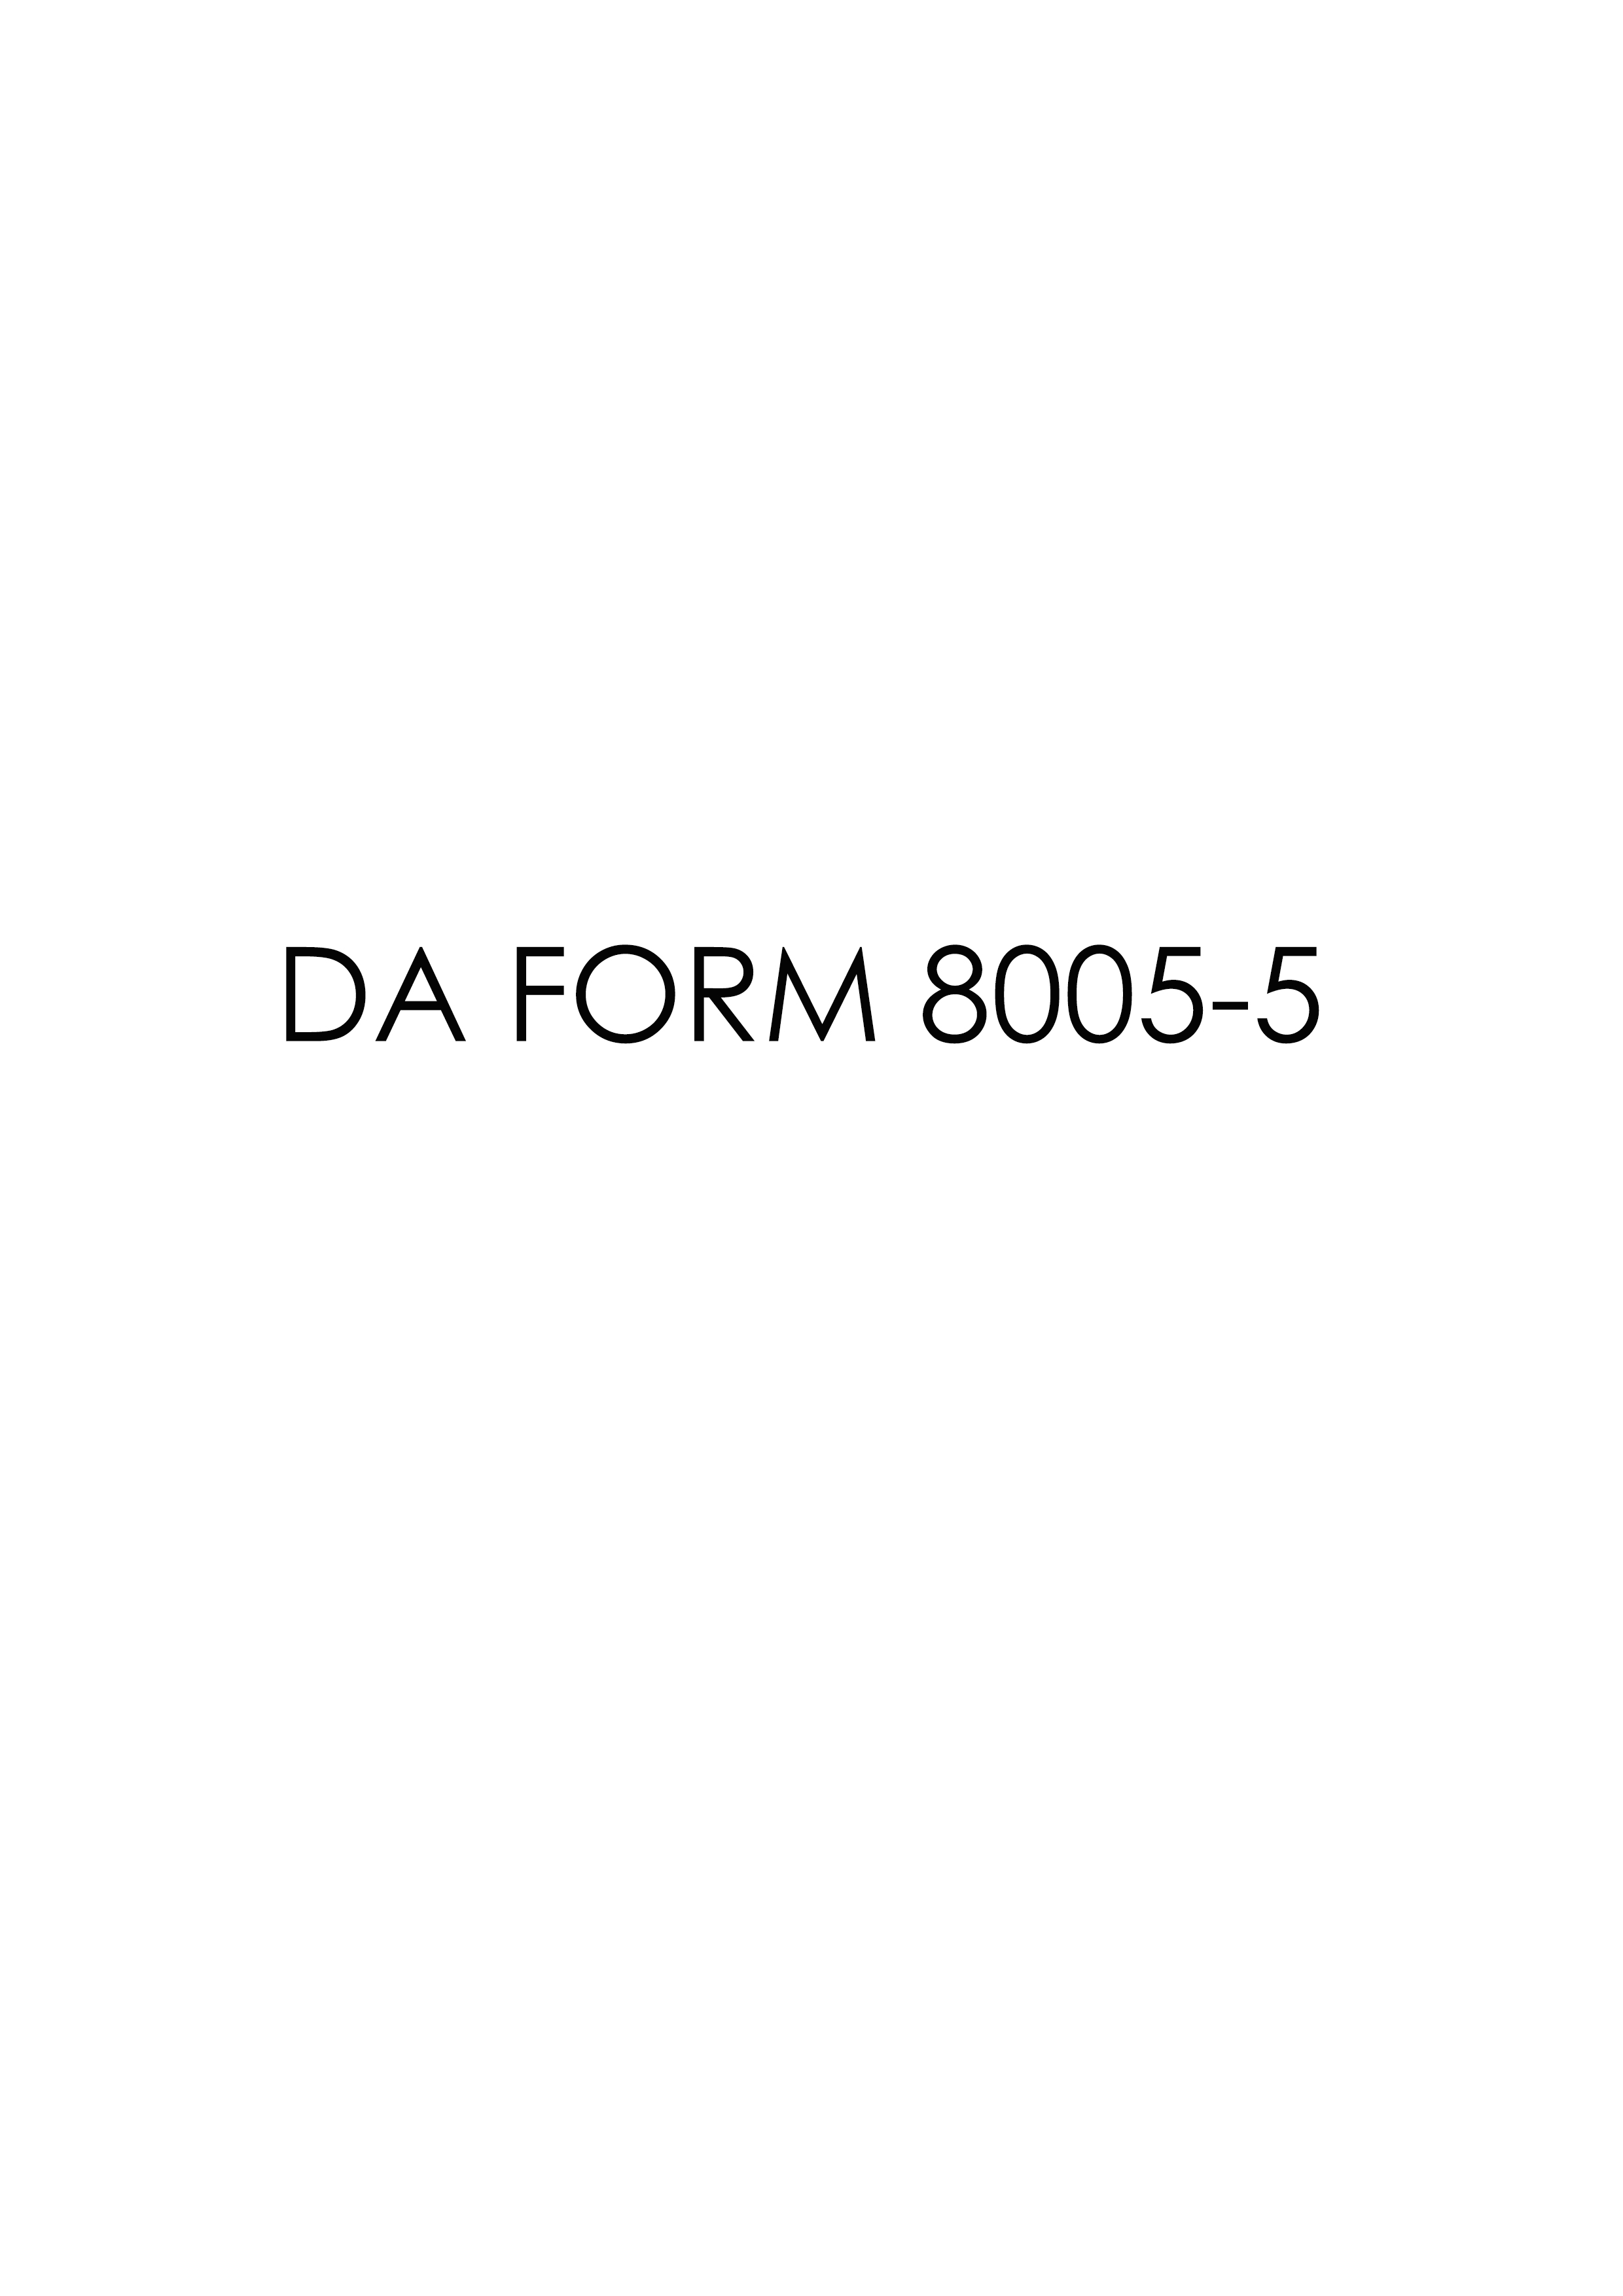 Download da 8005-5 Form